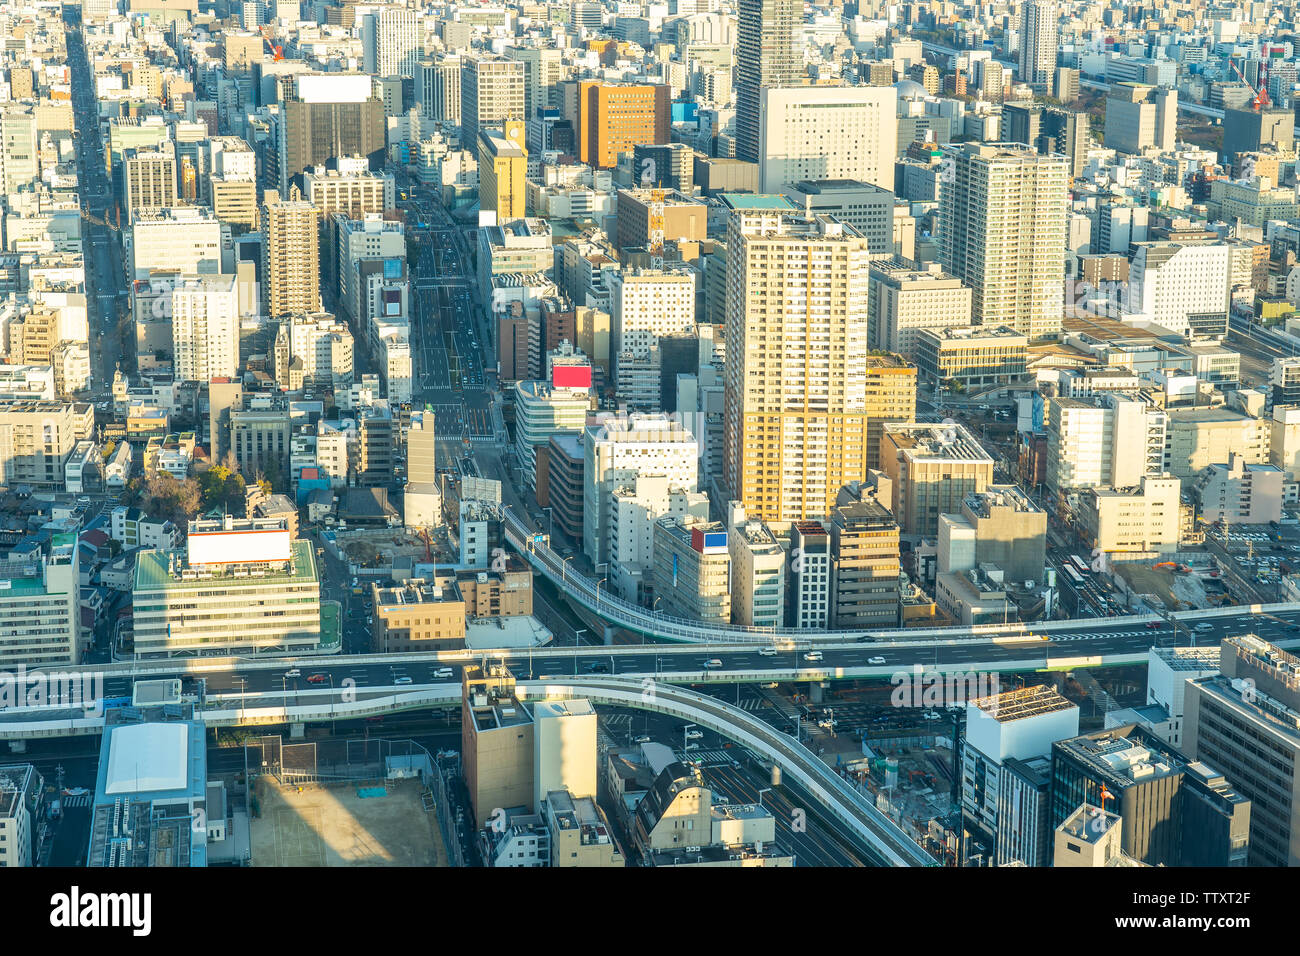 View of Nagoya cityscape in Nagoya, Japan. Stock Photo